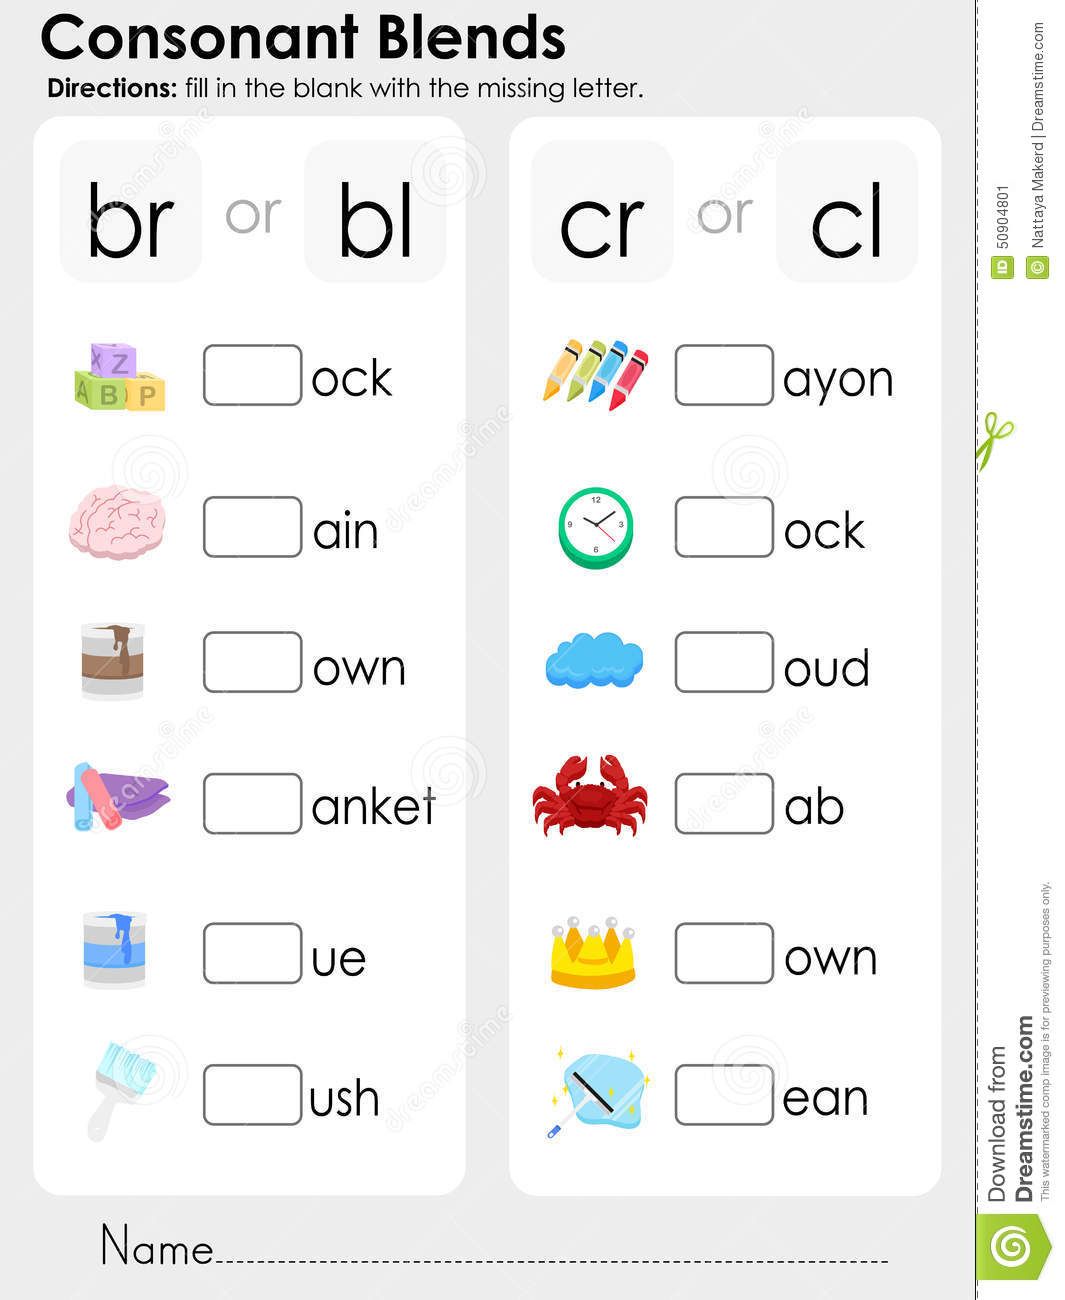 Consonant Blends Worksheets For Grade 2